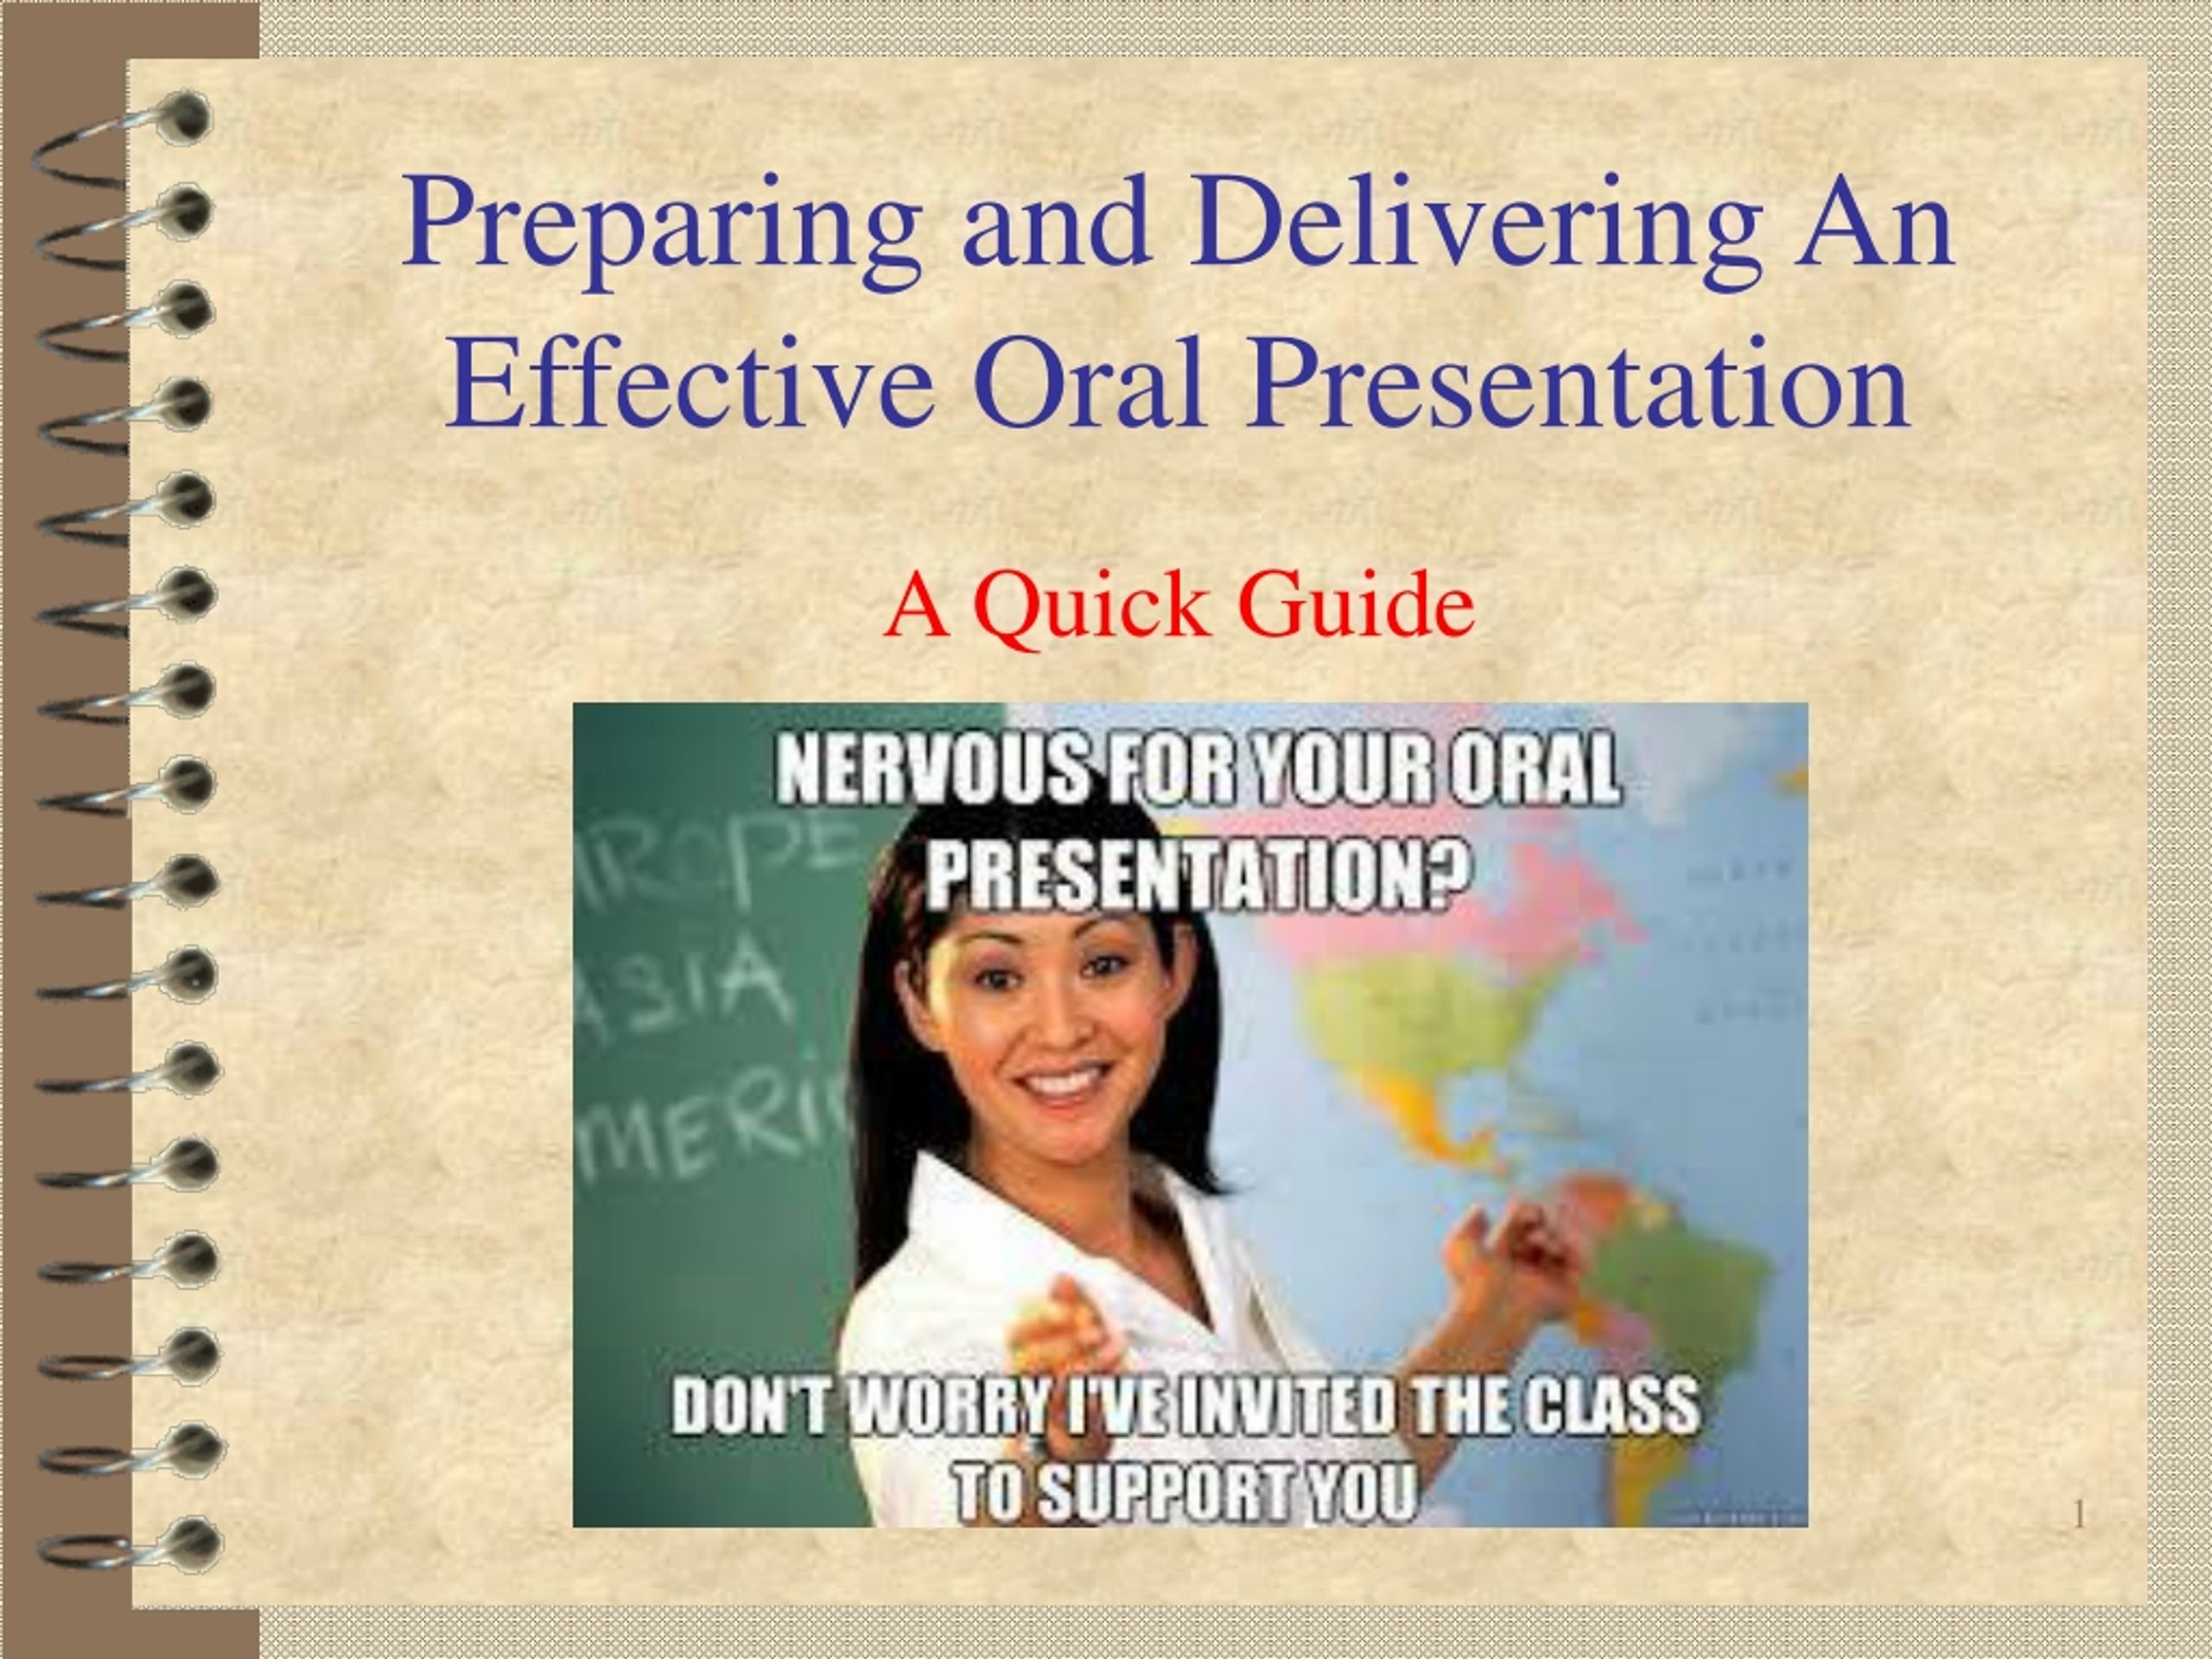 when delivering an oral presentation you should